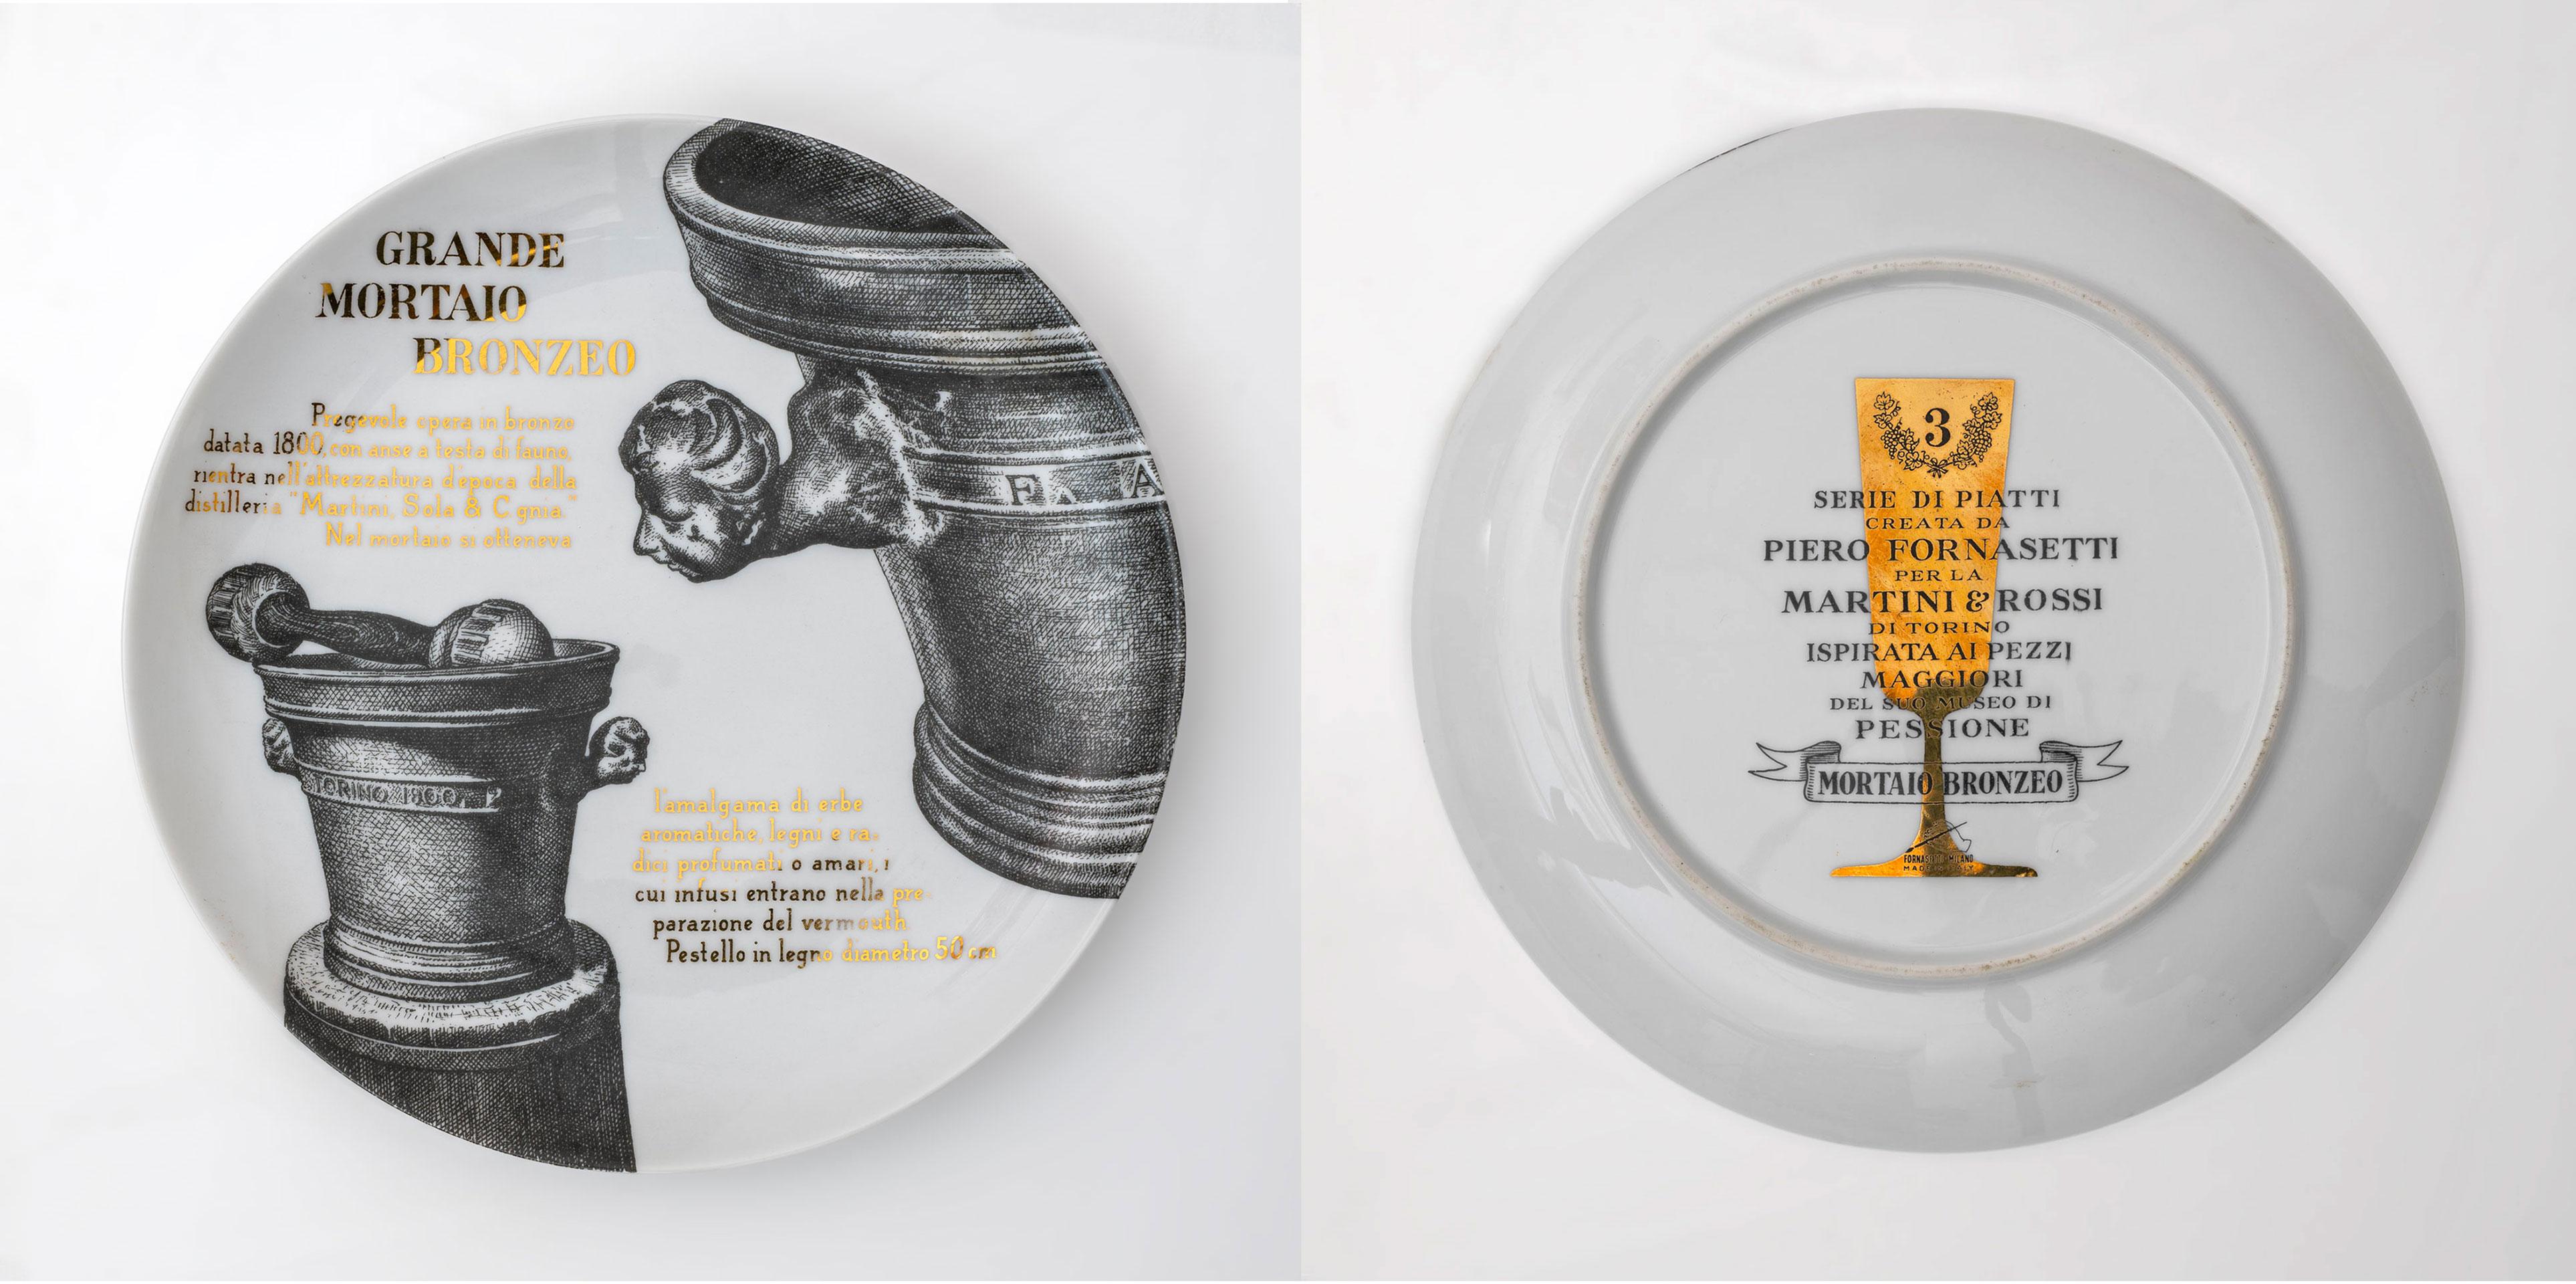 Italian Set of P. Fornasetti Decorative Porcelain Plates for Martini & Rossi, 1960s For Sale